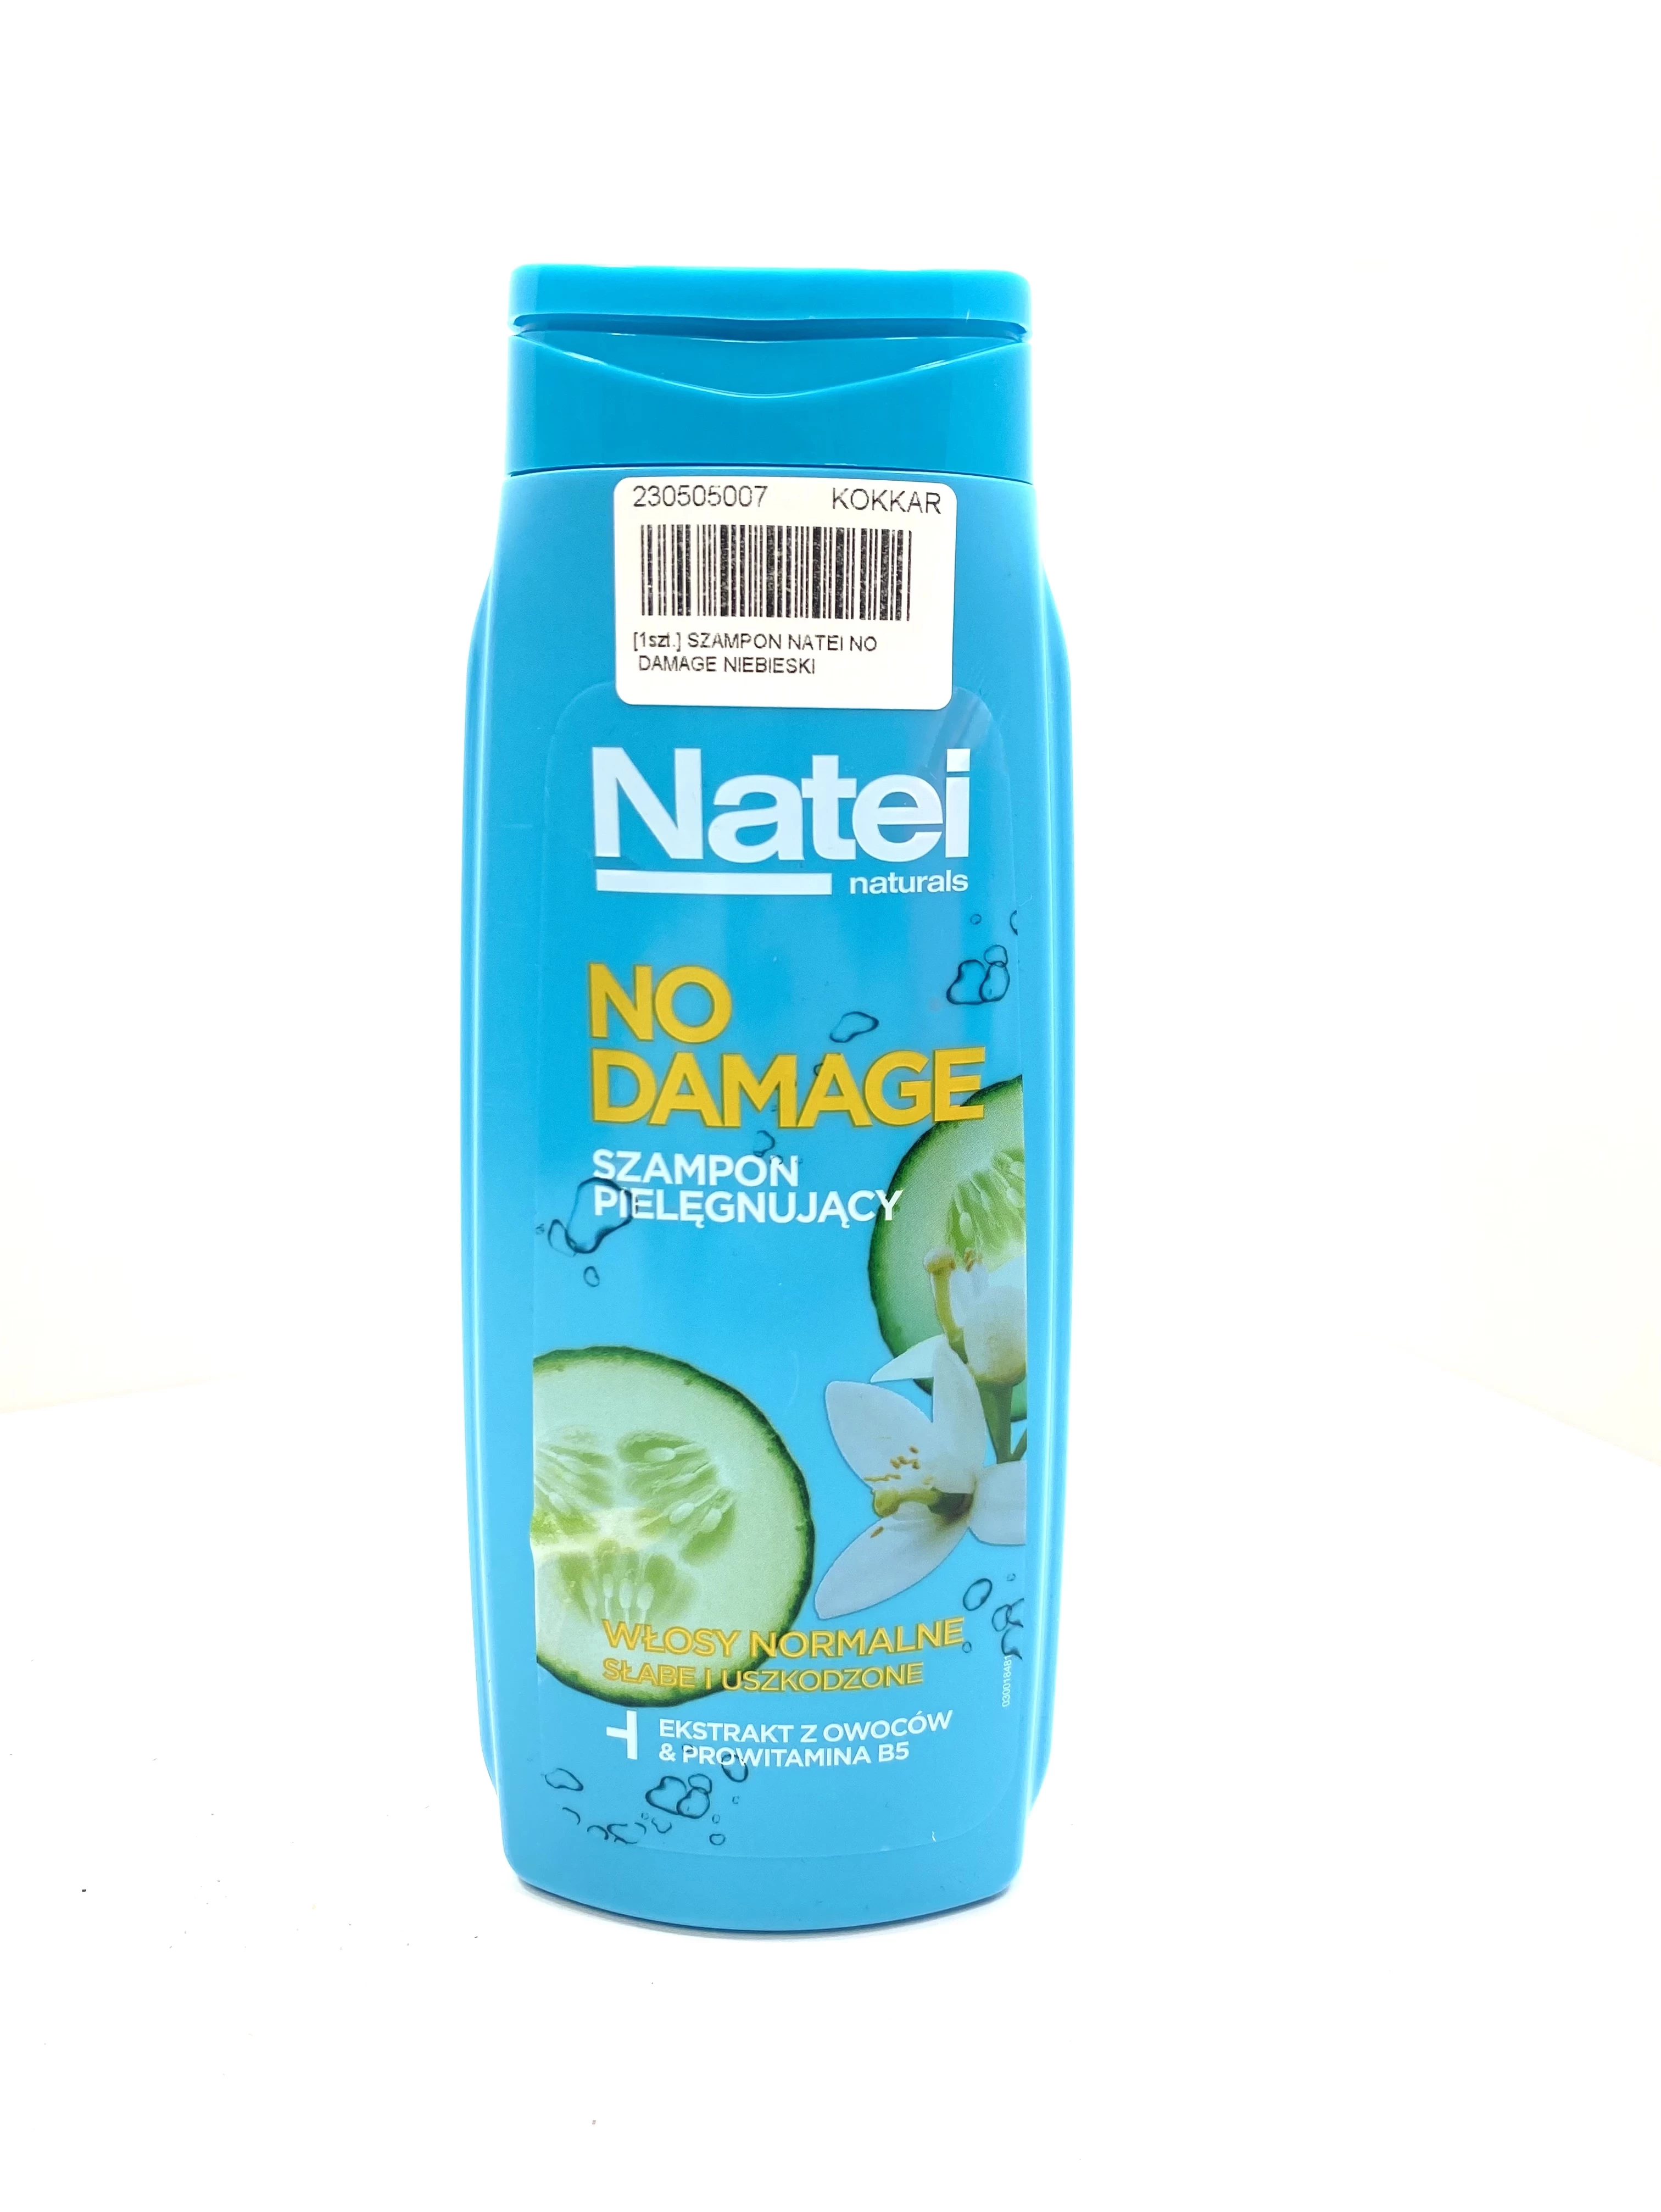 natei szampon no damage